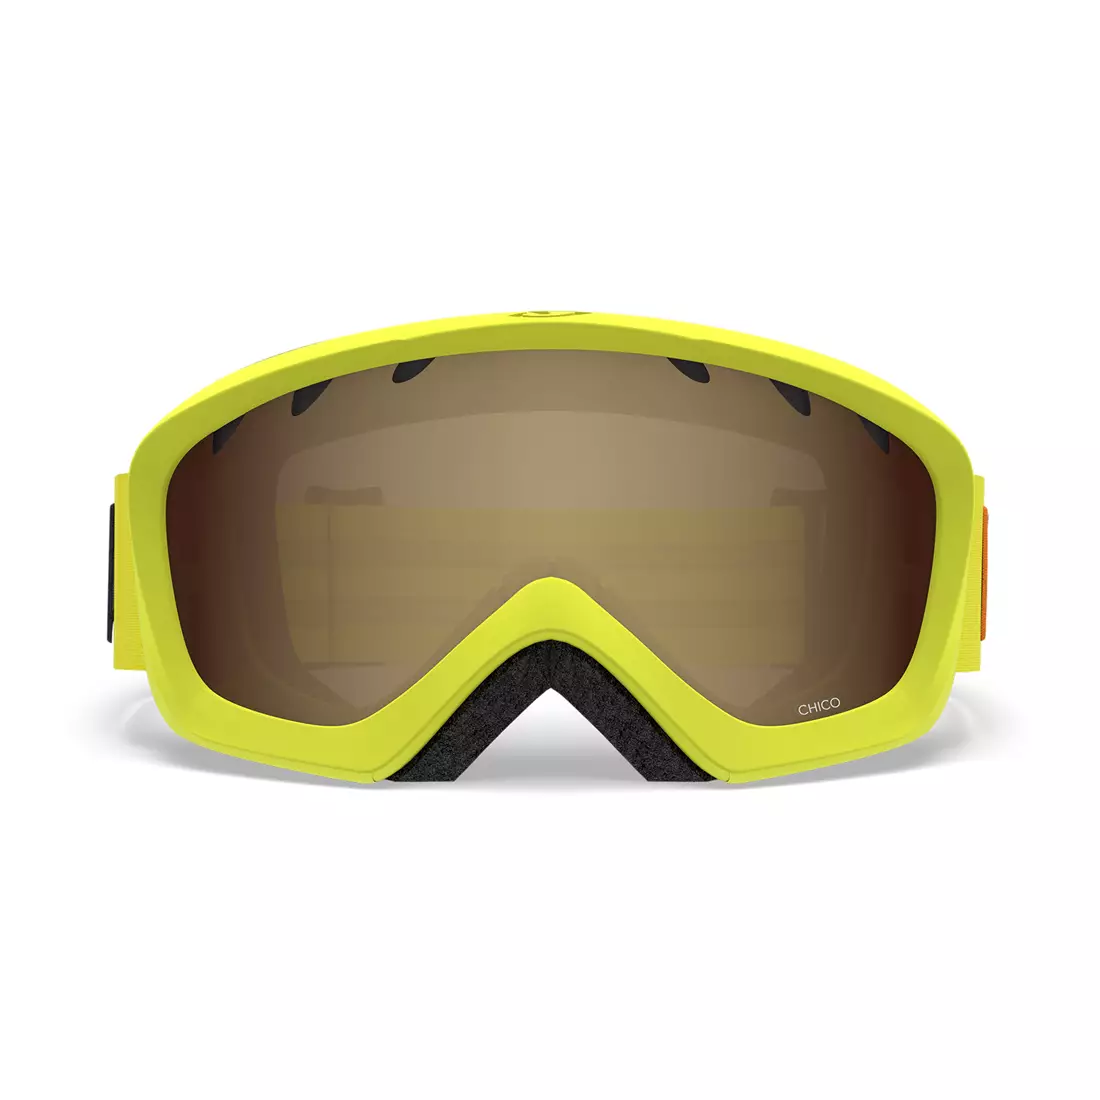 Junior ski / snowboard goggles CHICO NAMUK YELLOW GR-7105420